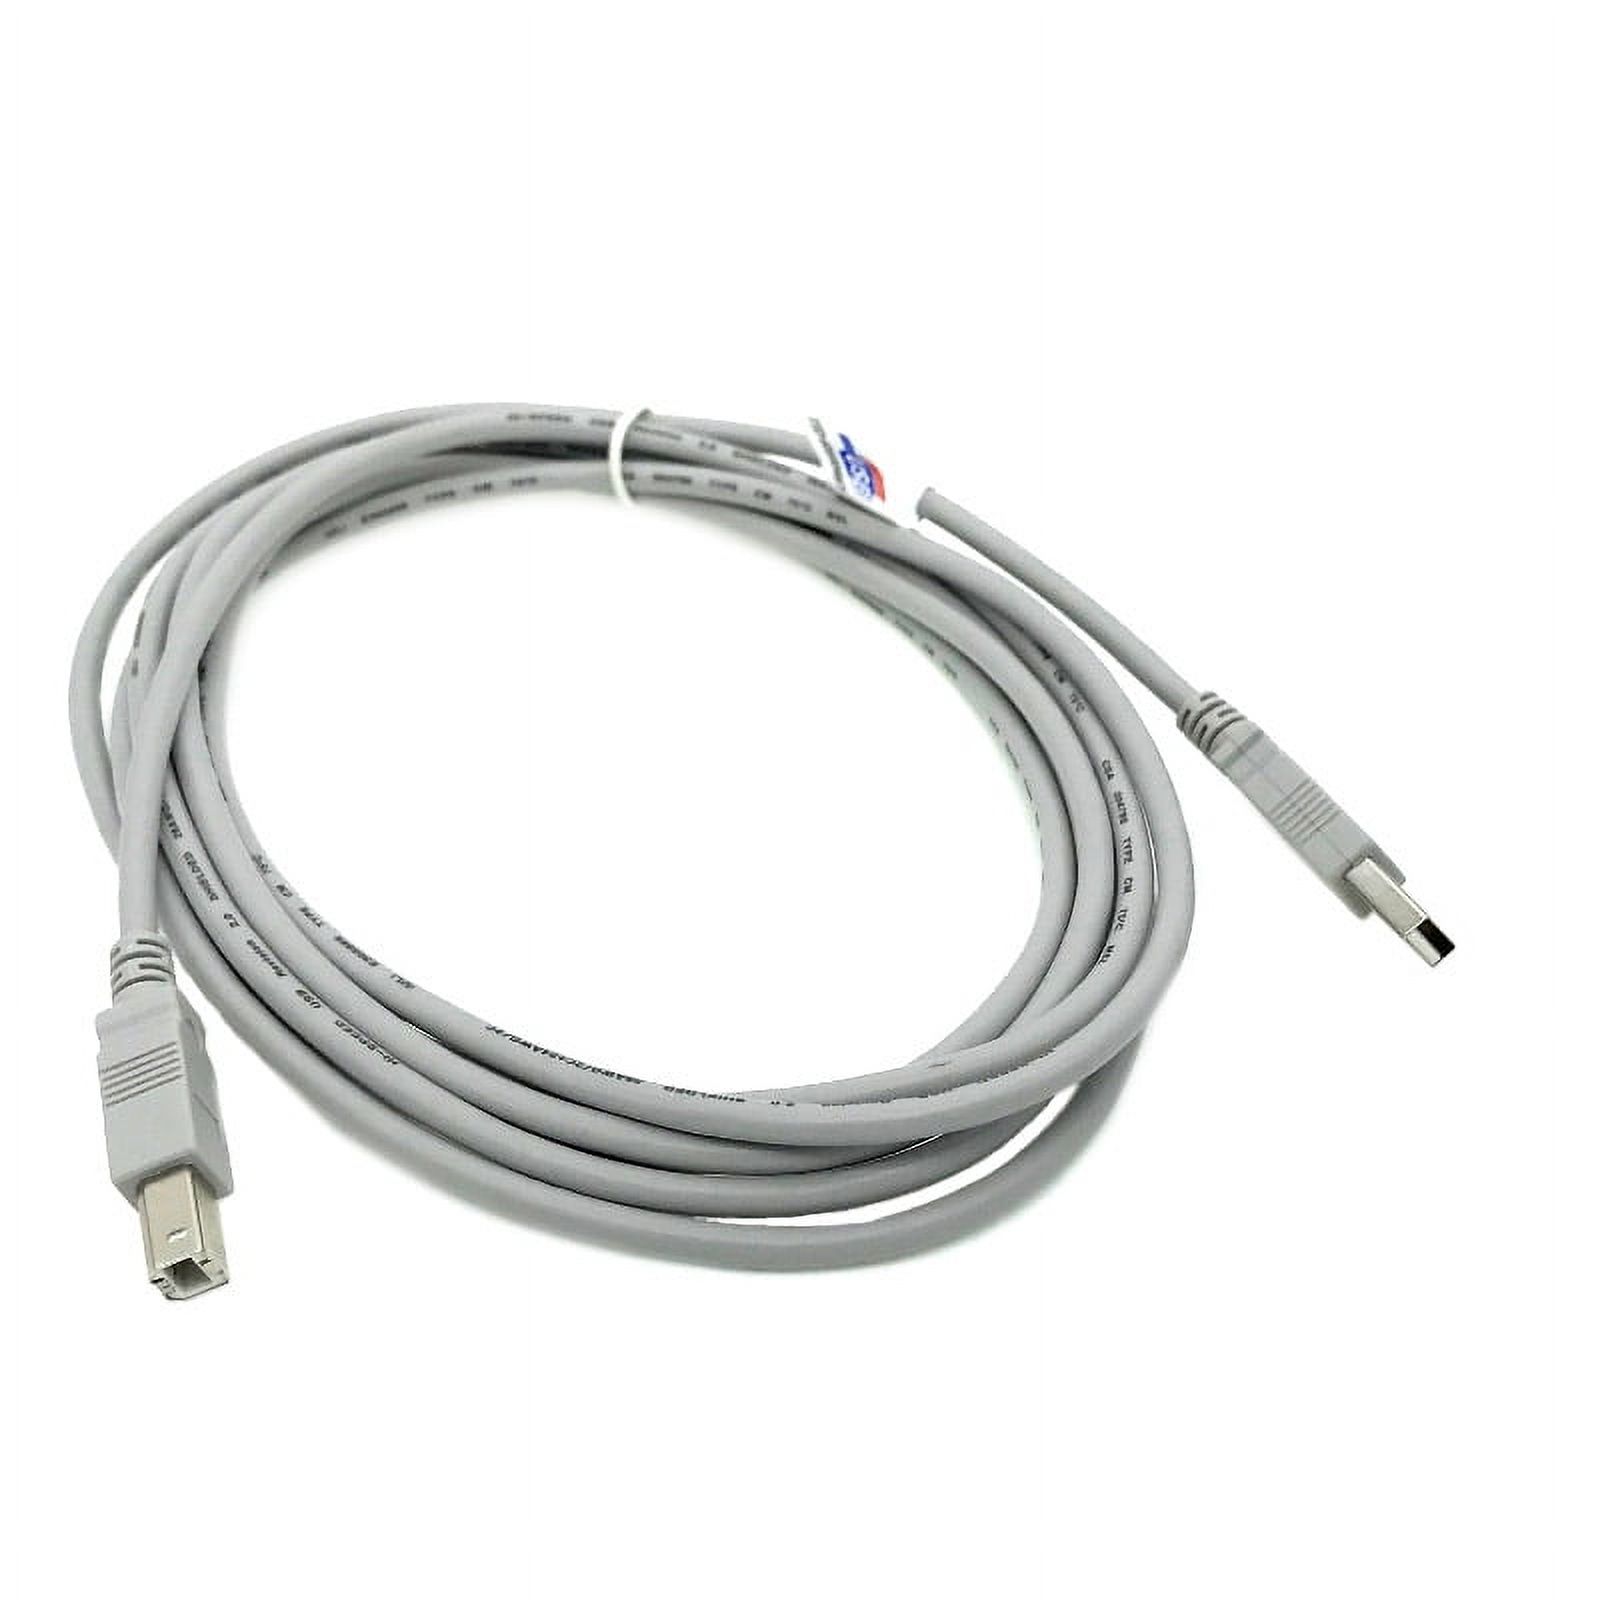 Kentek 10 Feet FT USB DATA PC Cable Cord For PIONEER DDJ-SR, DDJ-SB, DDJ-SP1 DJ Controller Mixer Beige - image 1 of 1